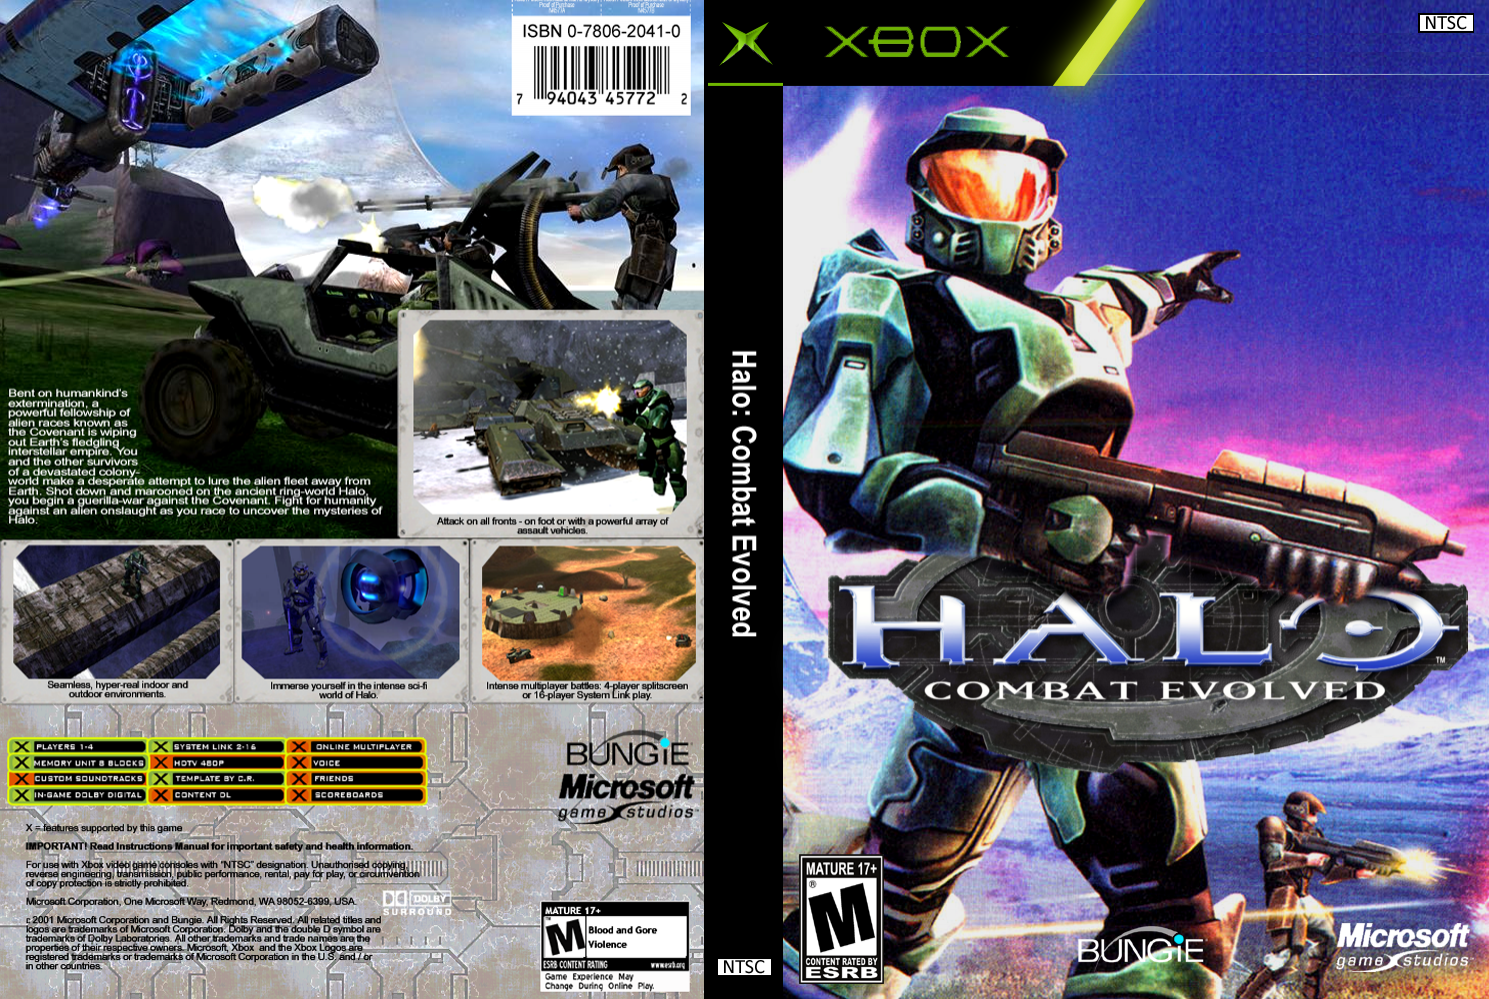 Xbox Halo Combat Evolved — The Pop Culture Antique Museum